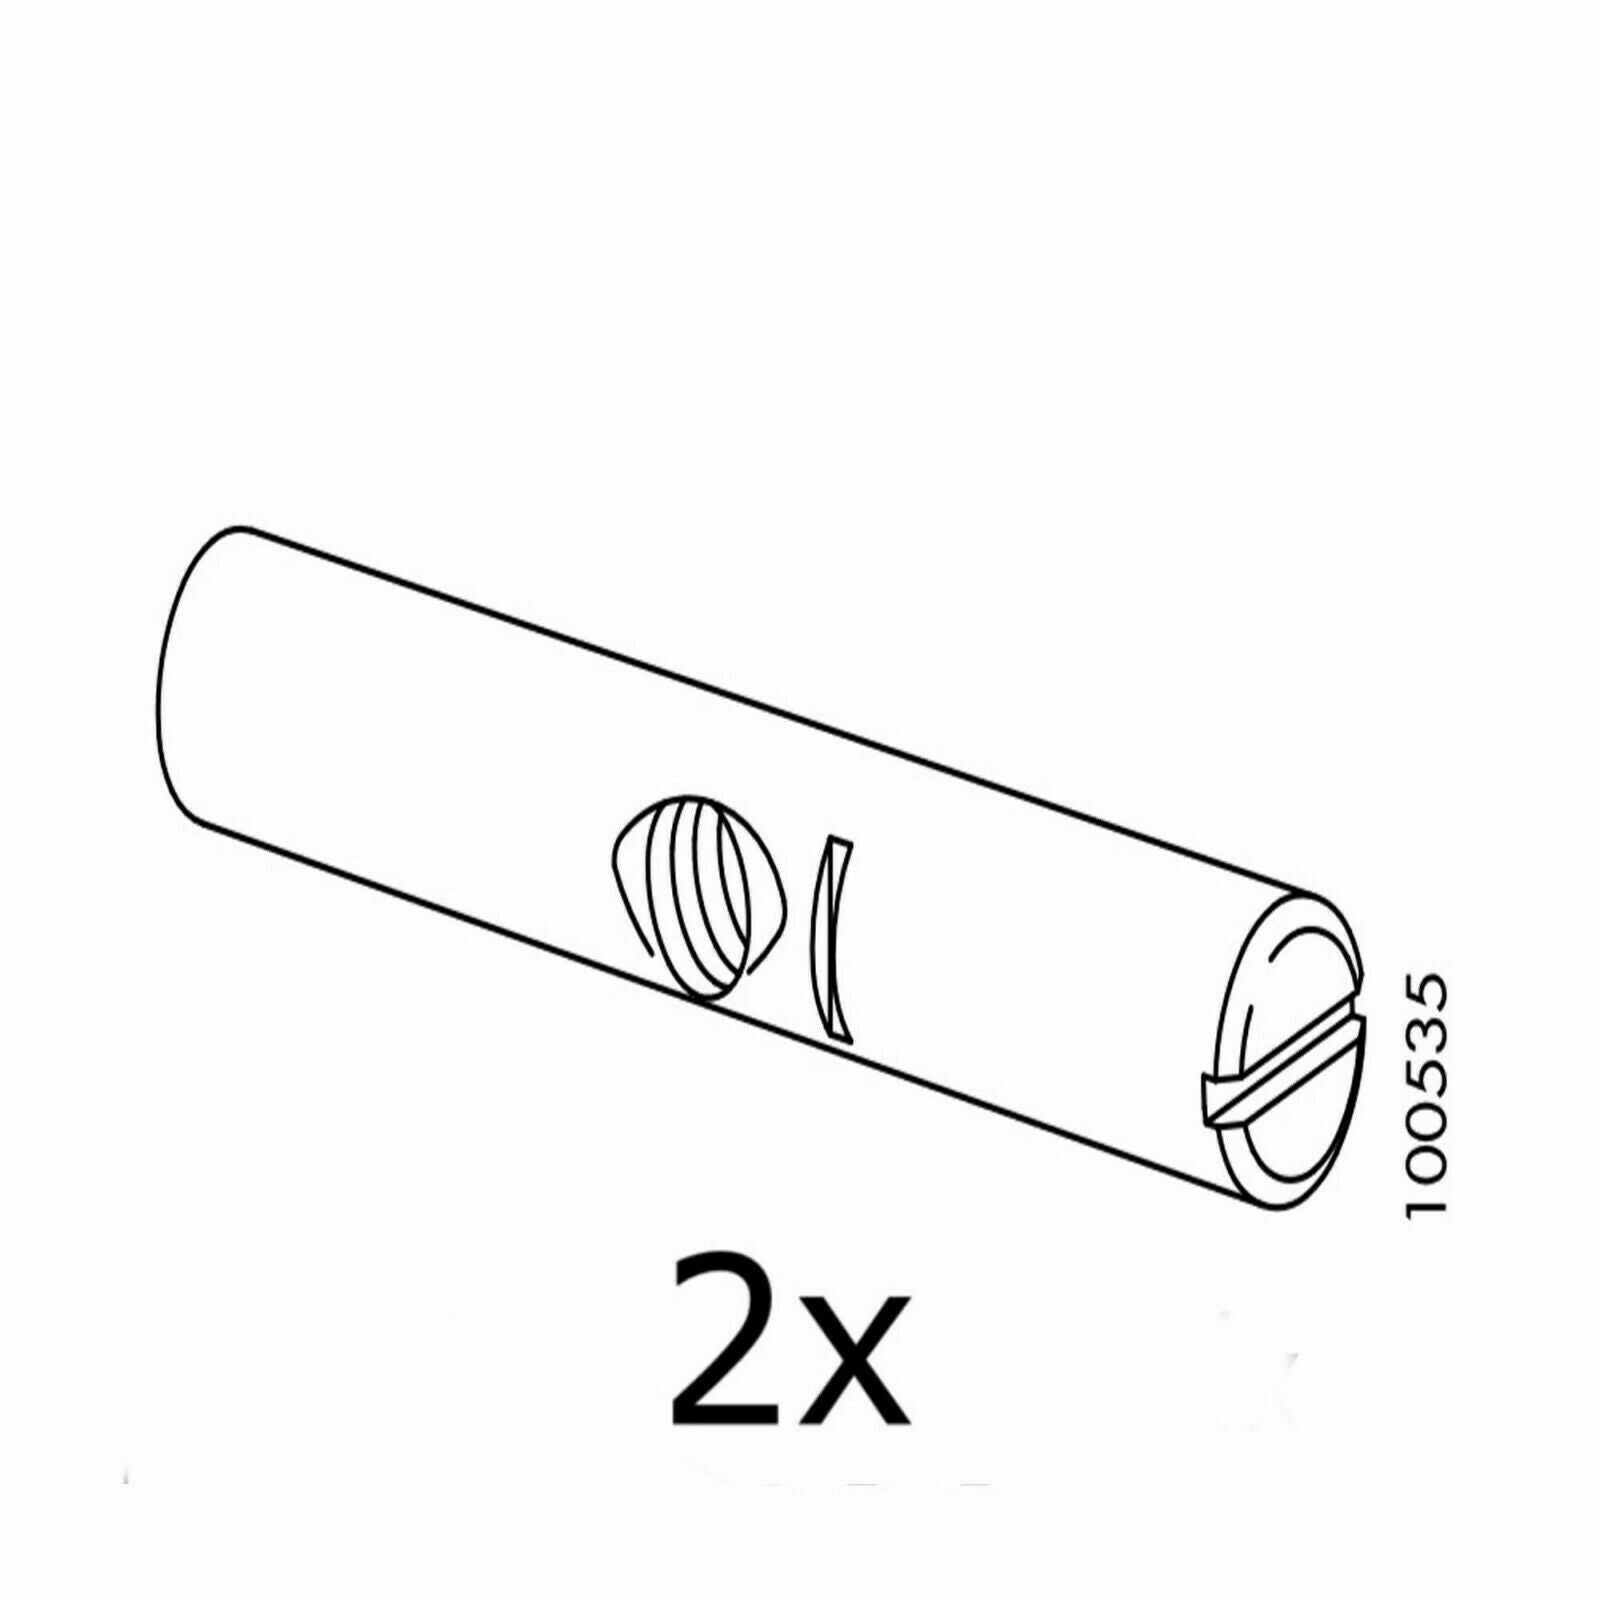 IKEA Cross Dowel Barrel Nut (2 pack) Part # 100535 Furniture Hardware Fittings